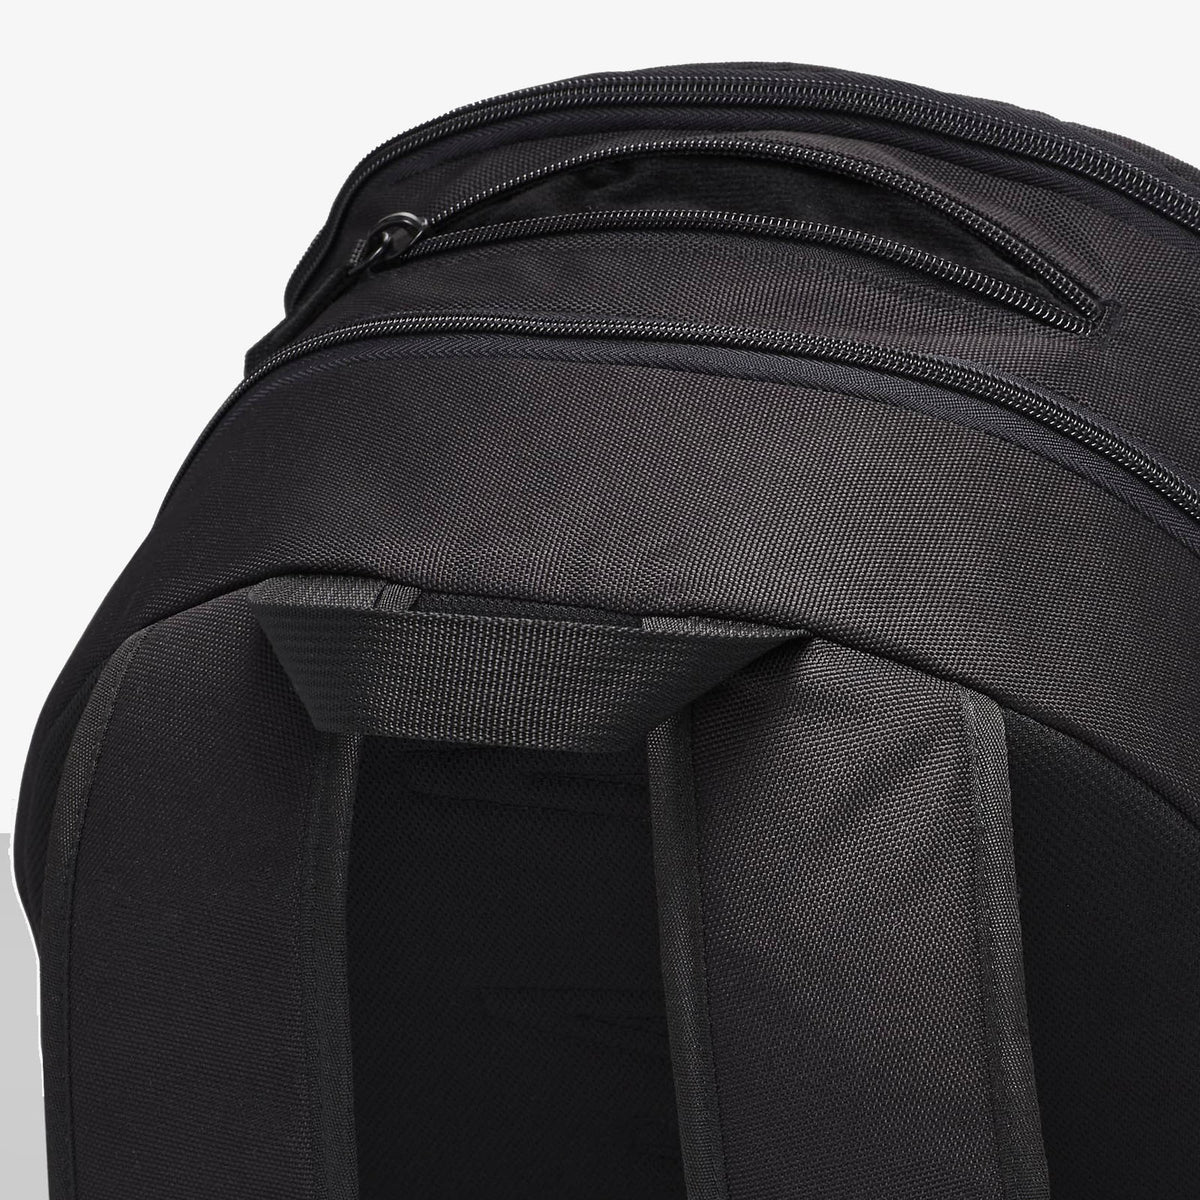 Jordan Brand Of Flight Backpack - Black